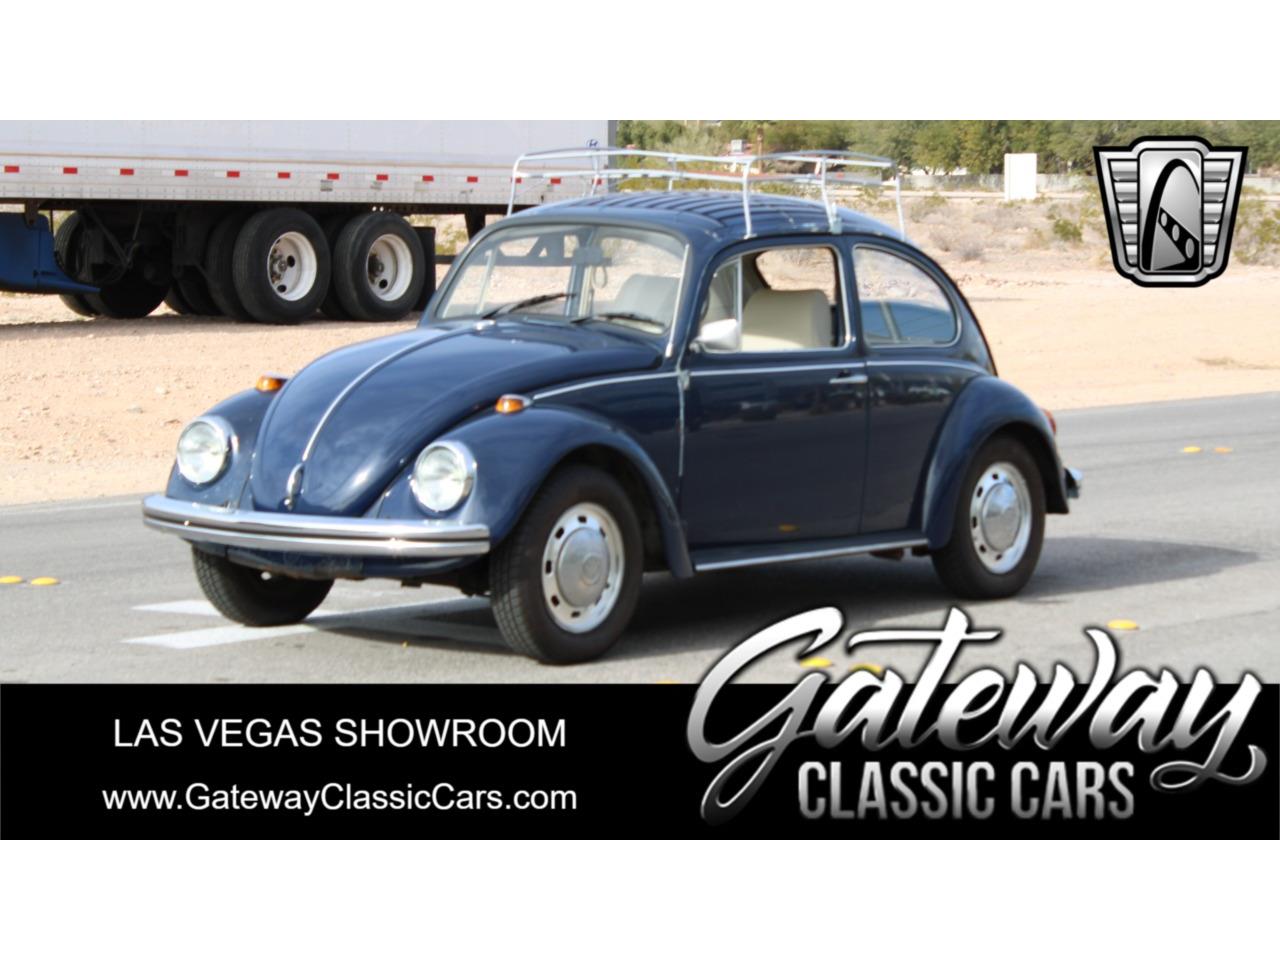 For Sale: 1969 Volkswagen Beetle in O'Fallon, Illinois for sale in O Fallon, IL